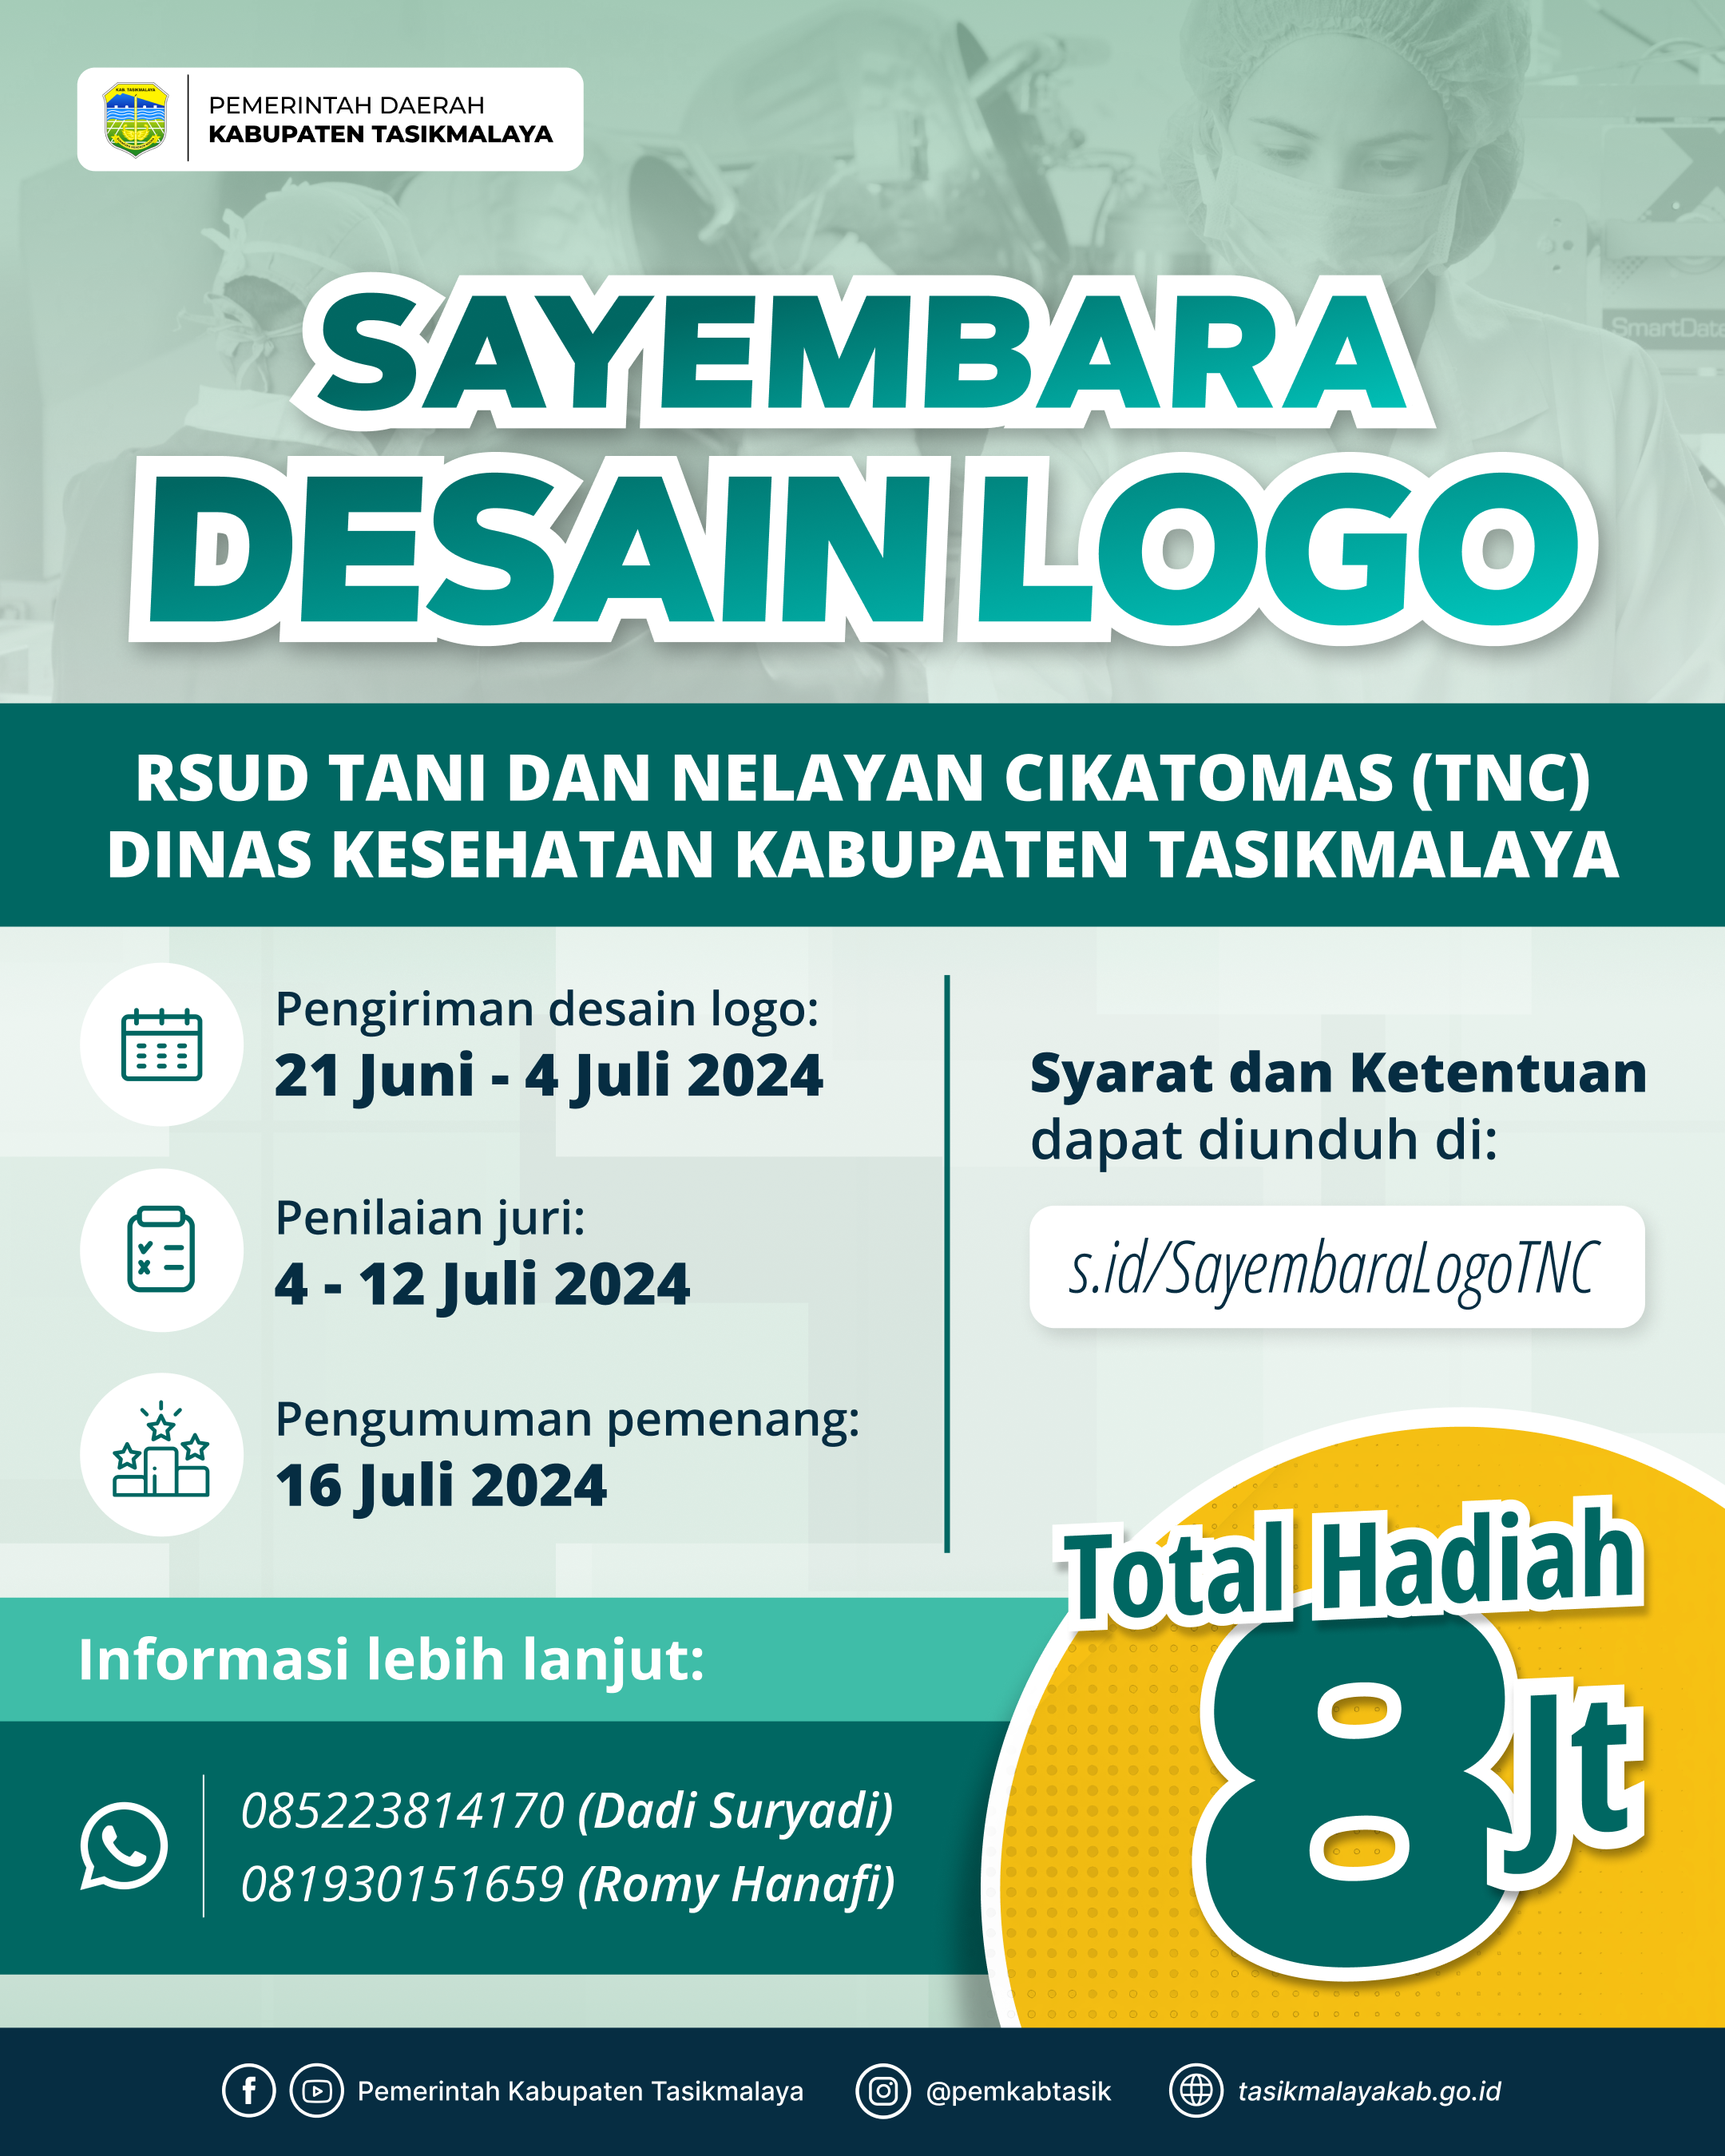 Sayembara Desain Logo "RSUD Tani dan Nelayan Cikatomas (TNC) Dinas Kesehatan Kabupaten Tasikmalaya"